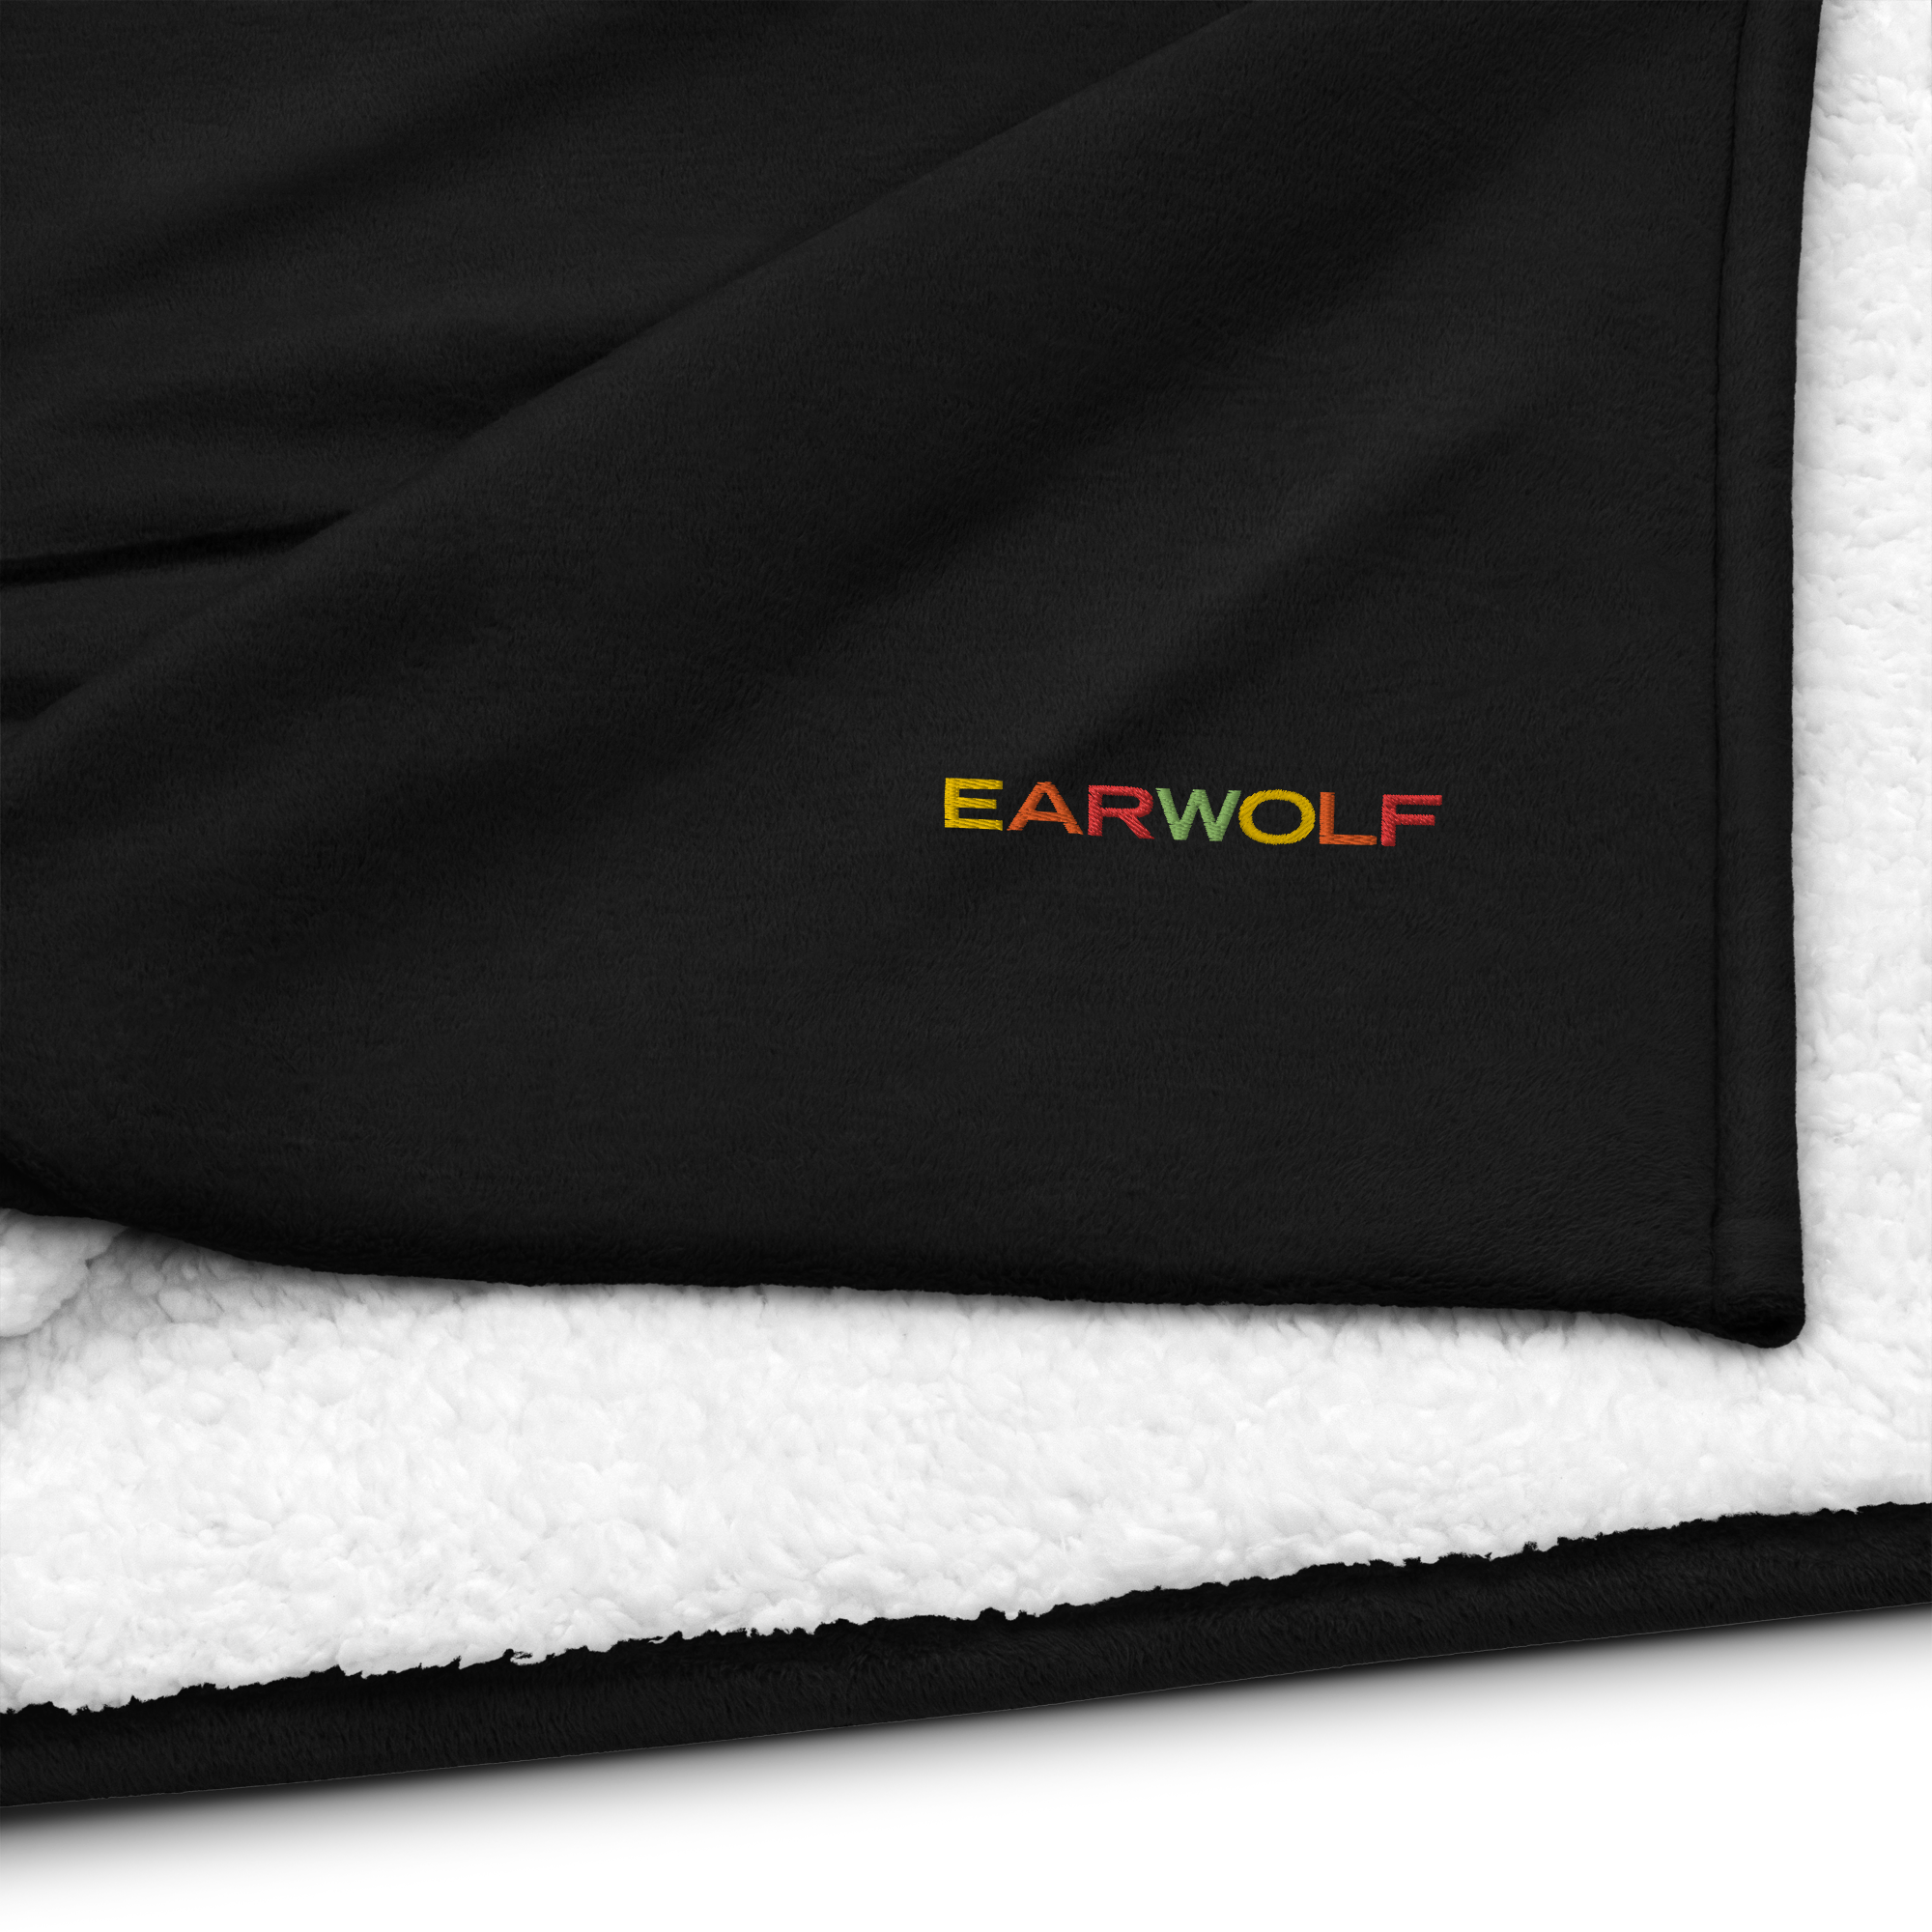 Earwolf: Premium sherpa blanket